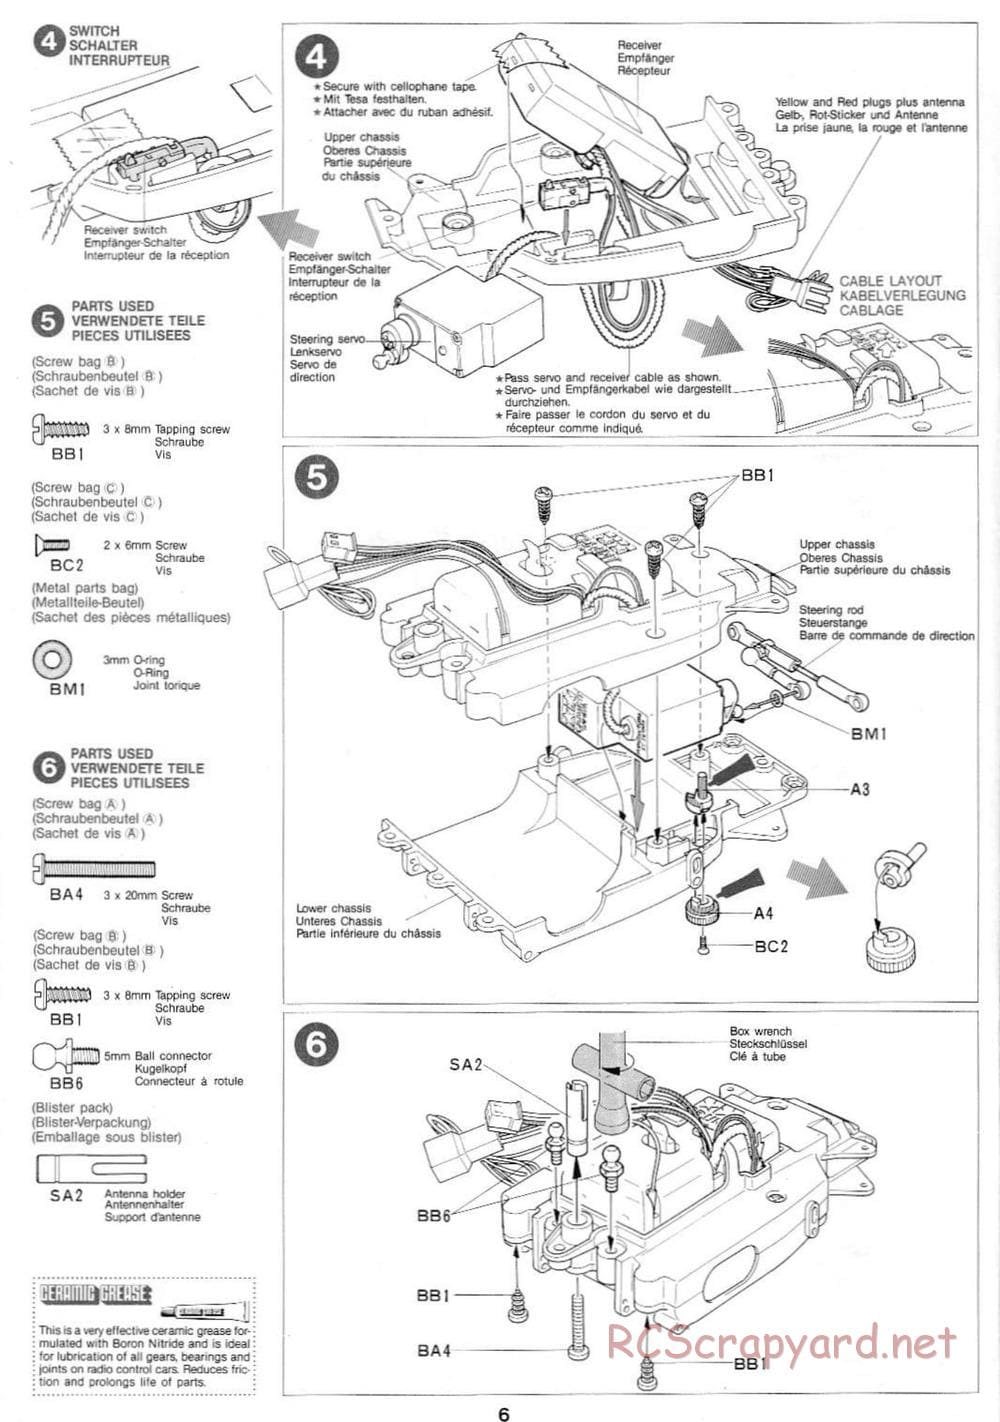 Tamiya - TamTech - On-Road Chassis - Manual - Page 6